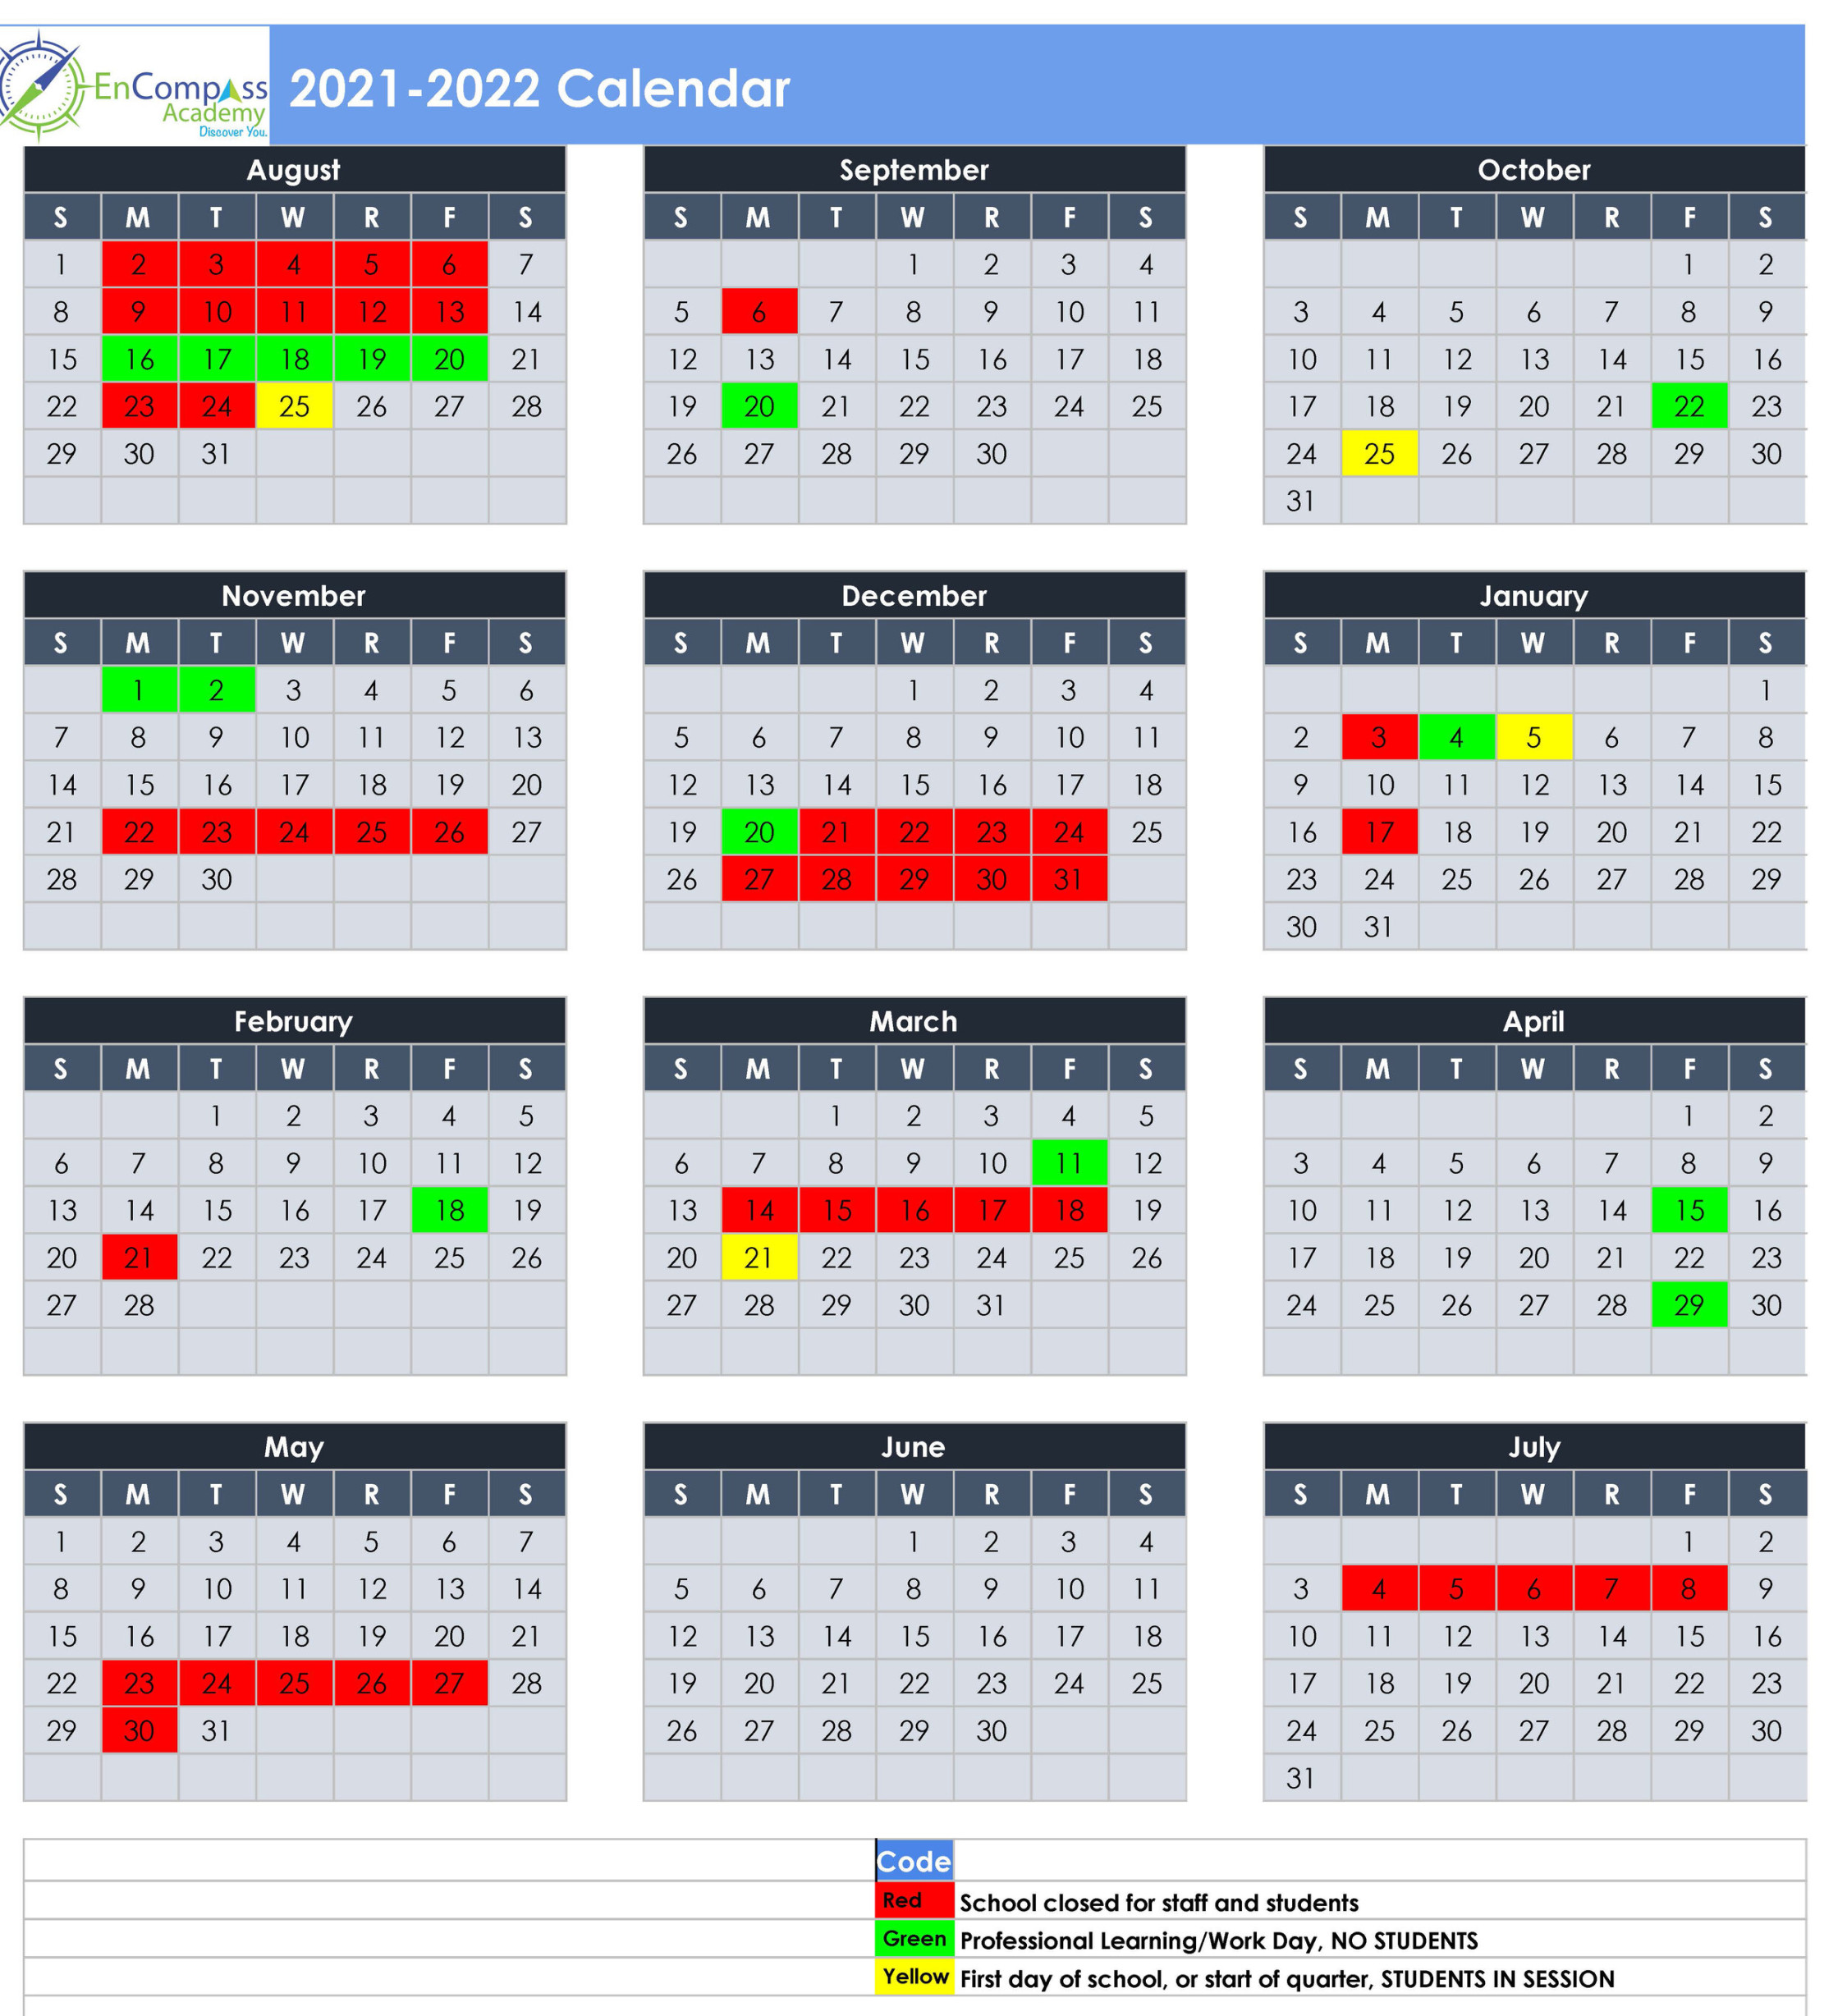 Calendar — EnCompass Academy